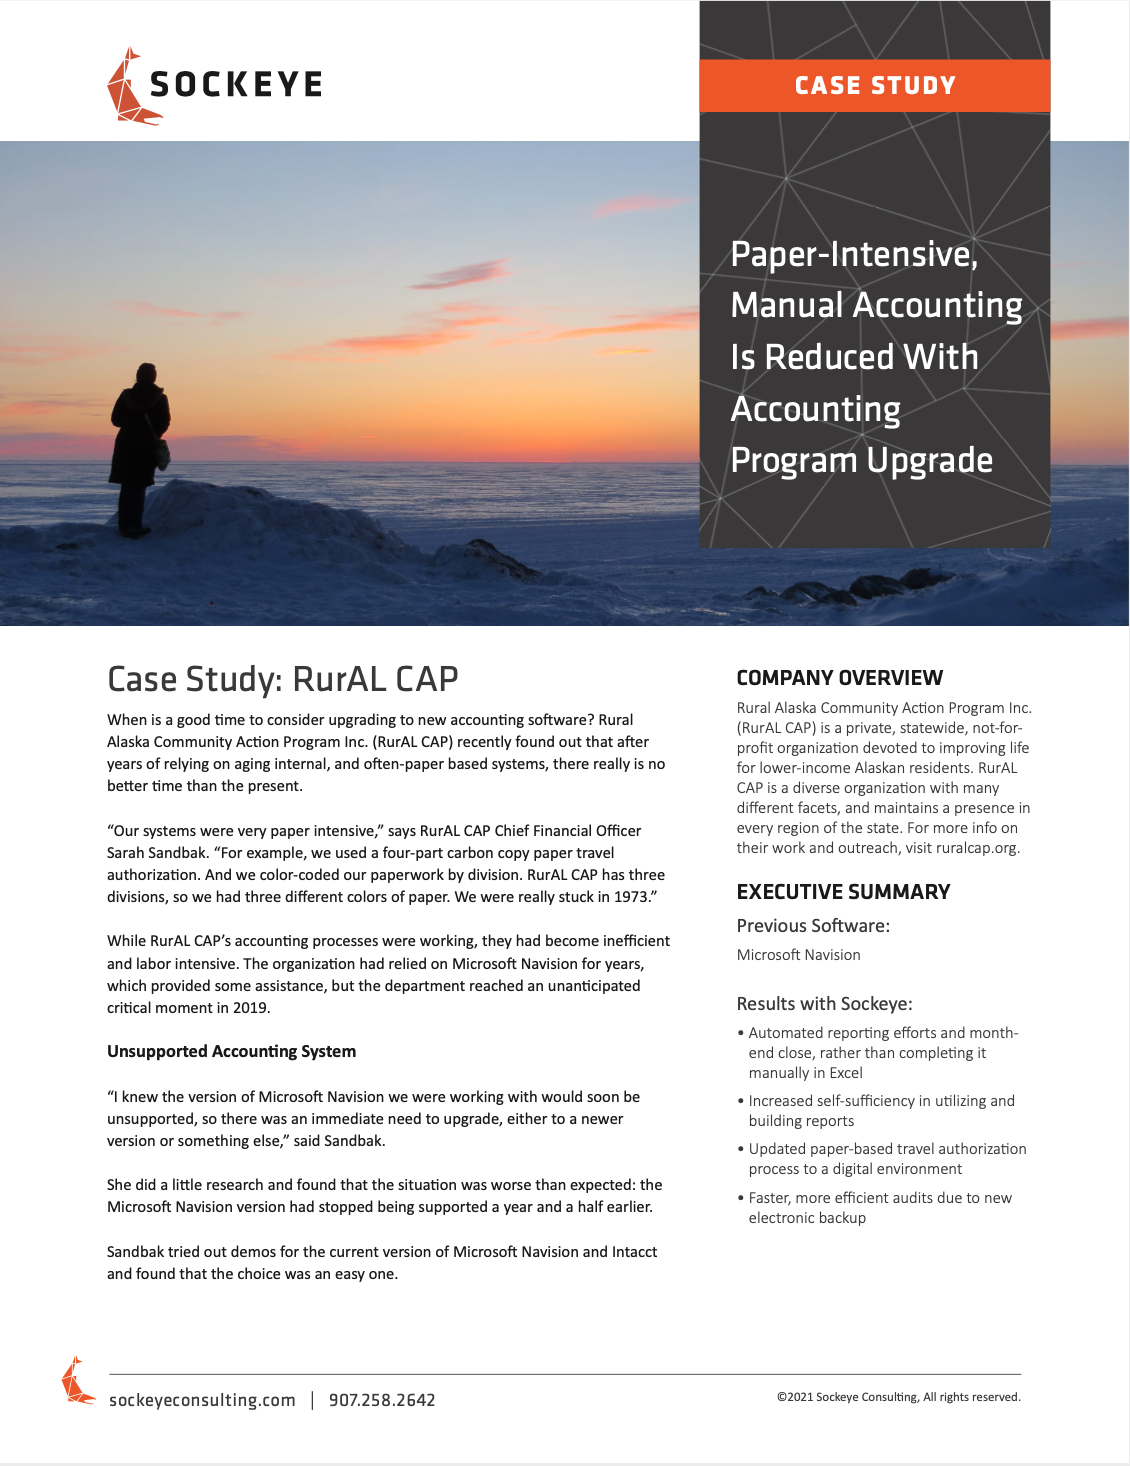 Sage Intacct Case Study RurAL CAP